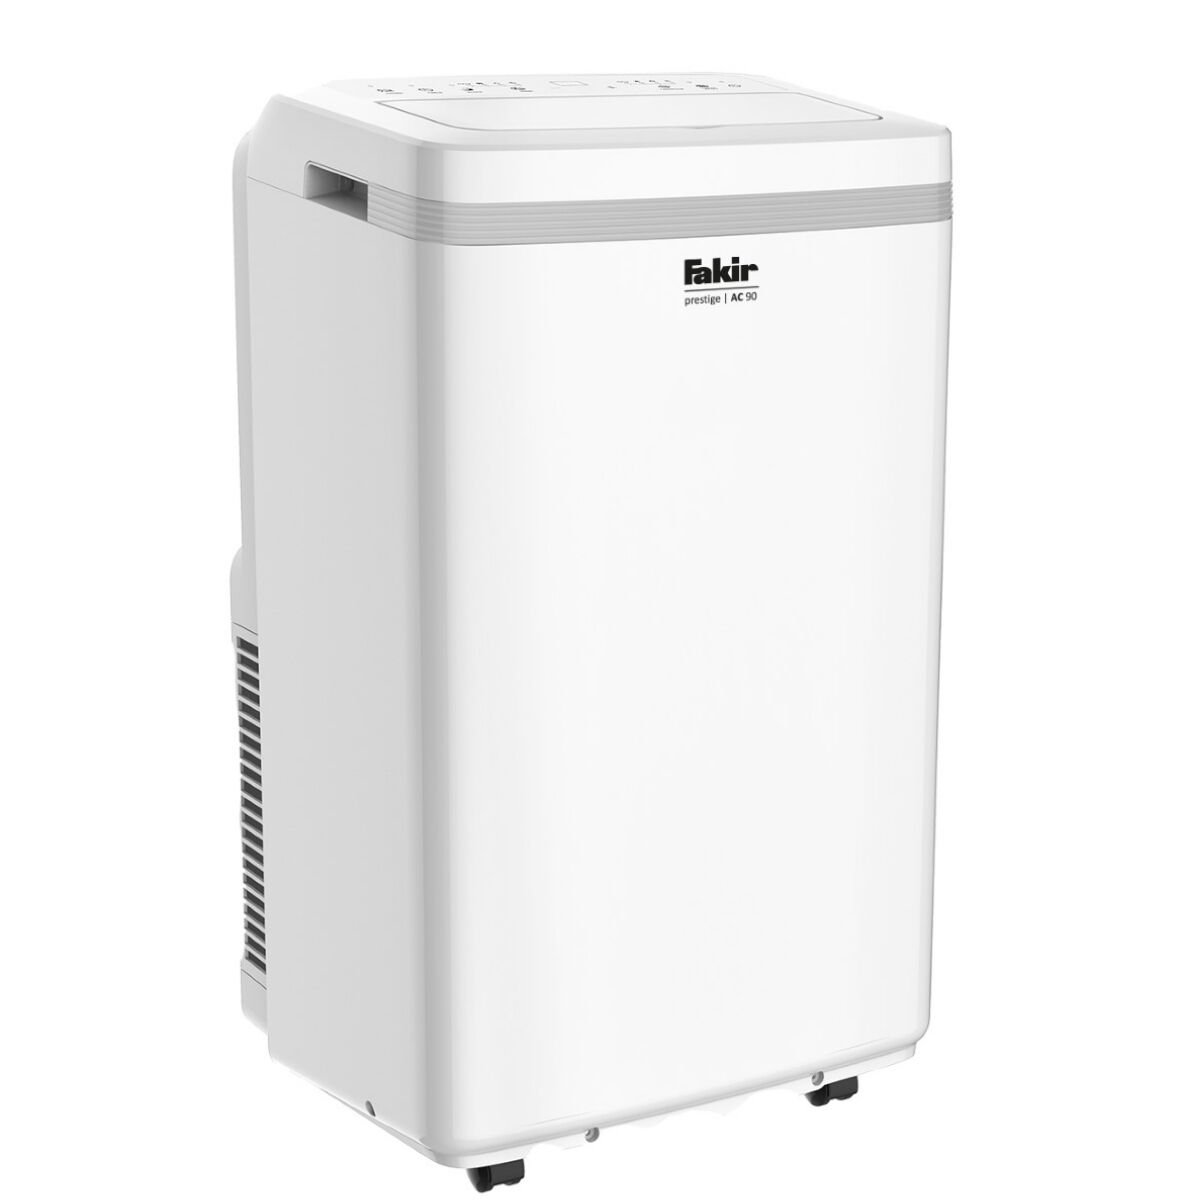 Fakir Prestige AC 90 Air Conditioner - Mobil Klima